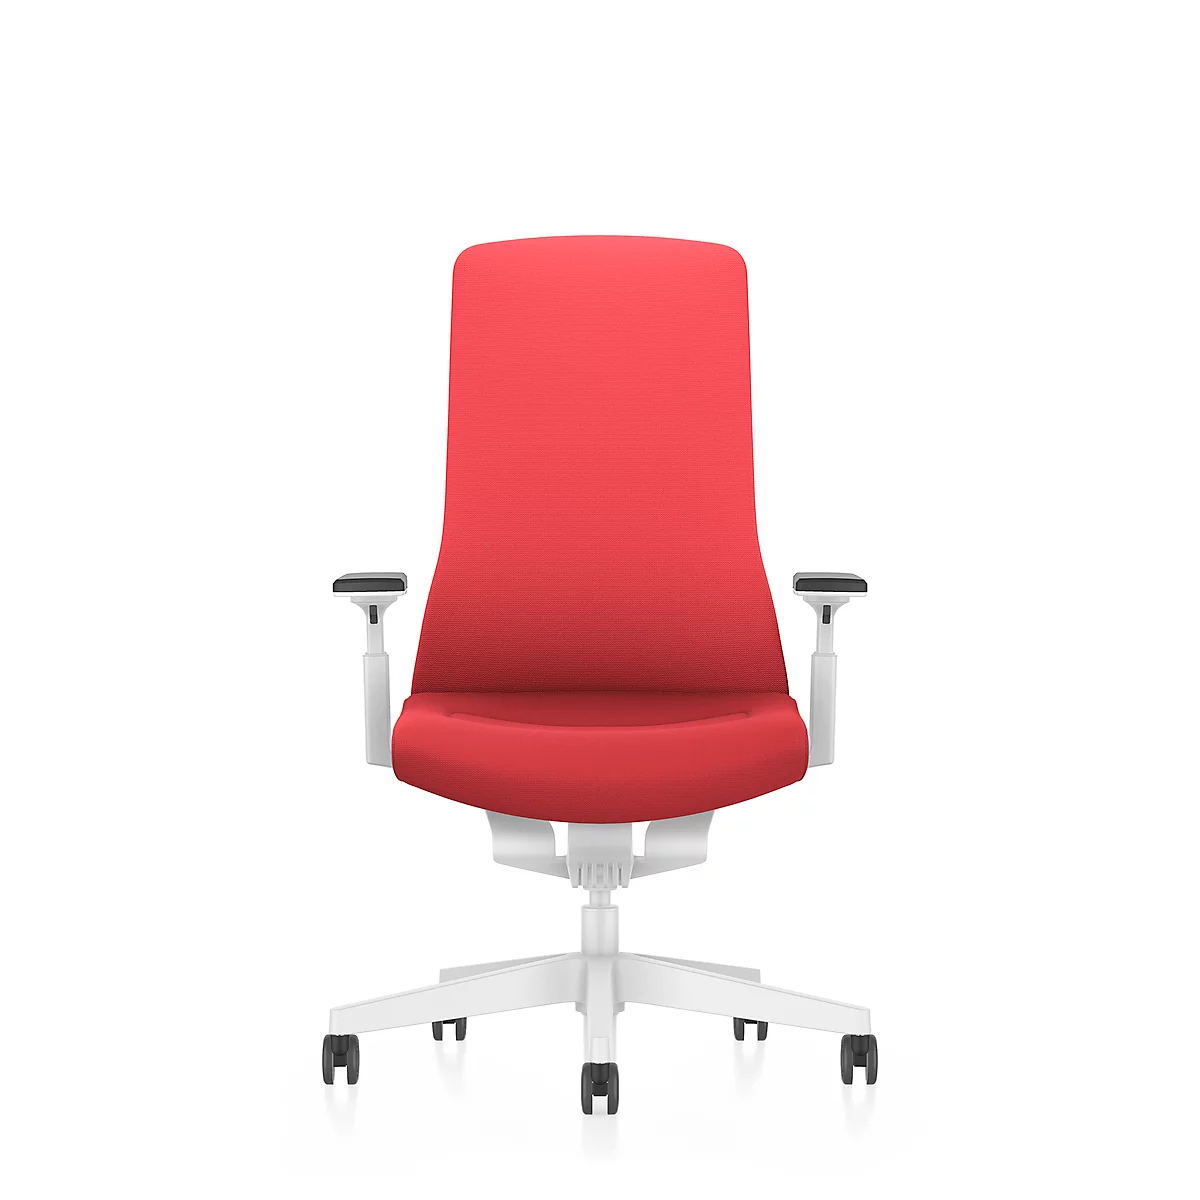 Interstuhl bureaustoel PUREis3, verstelbare armleuningen, 3D auto-synchroonmechanisme, kuipzitting, gestoffeerde rug, vuurrood/wit